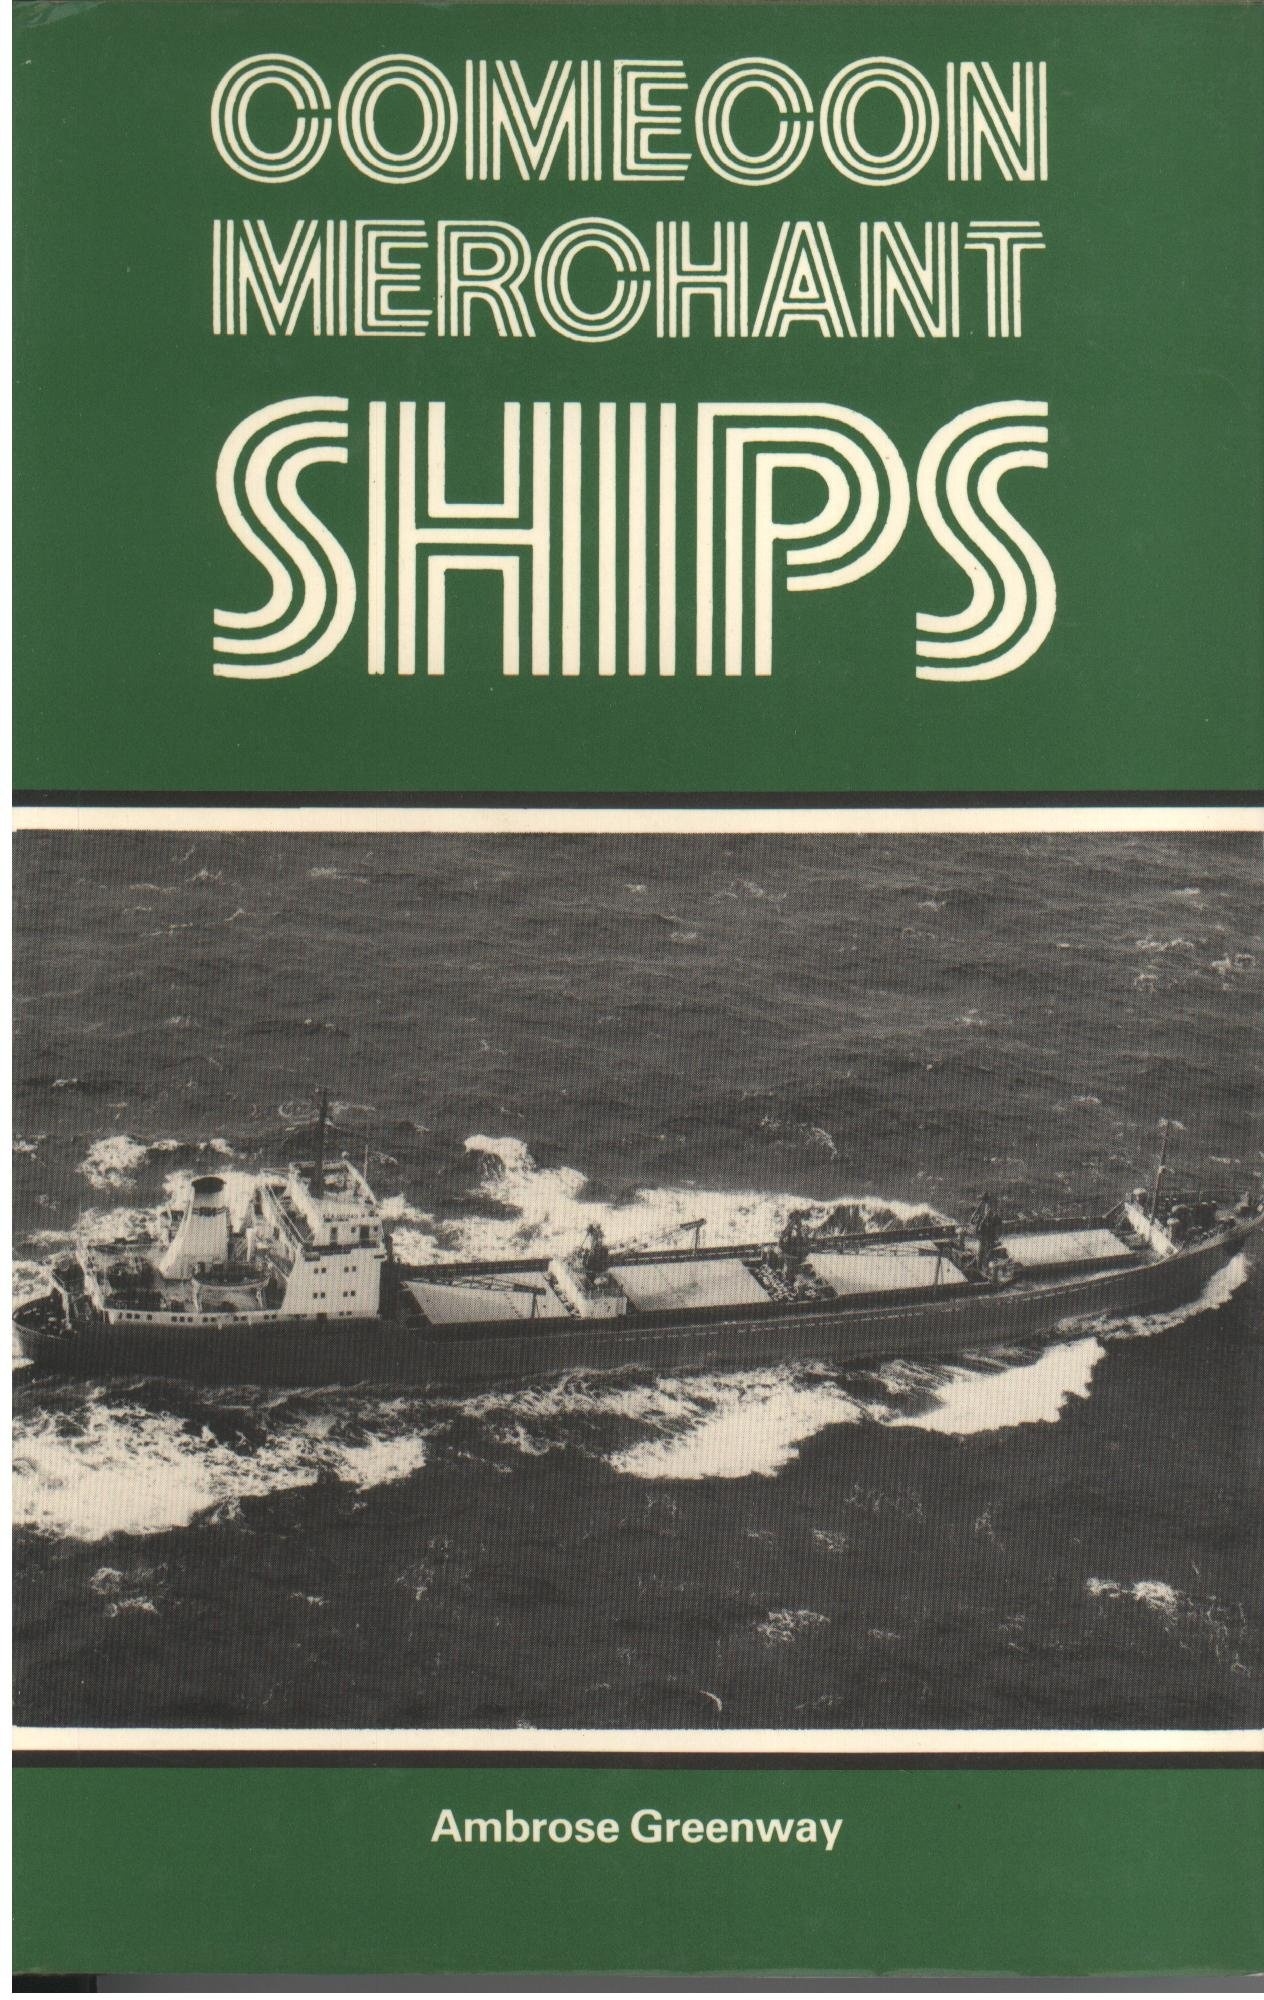 Soviet merchant ships